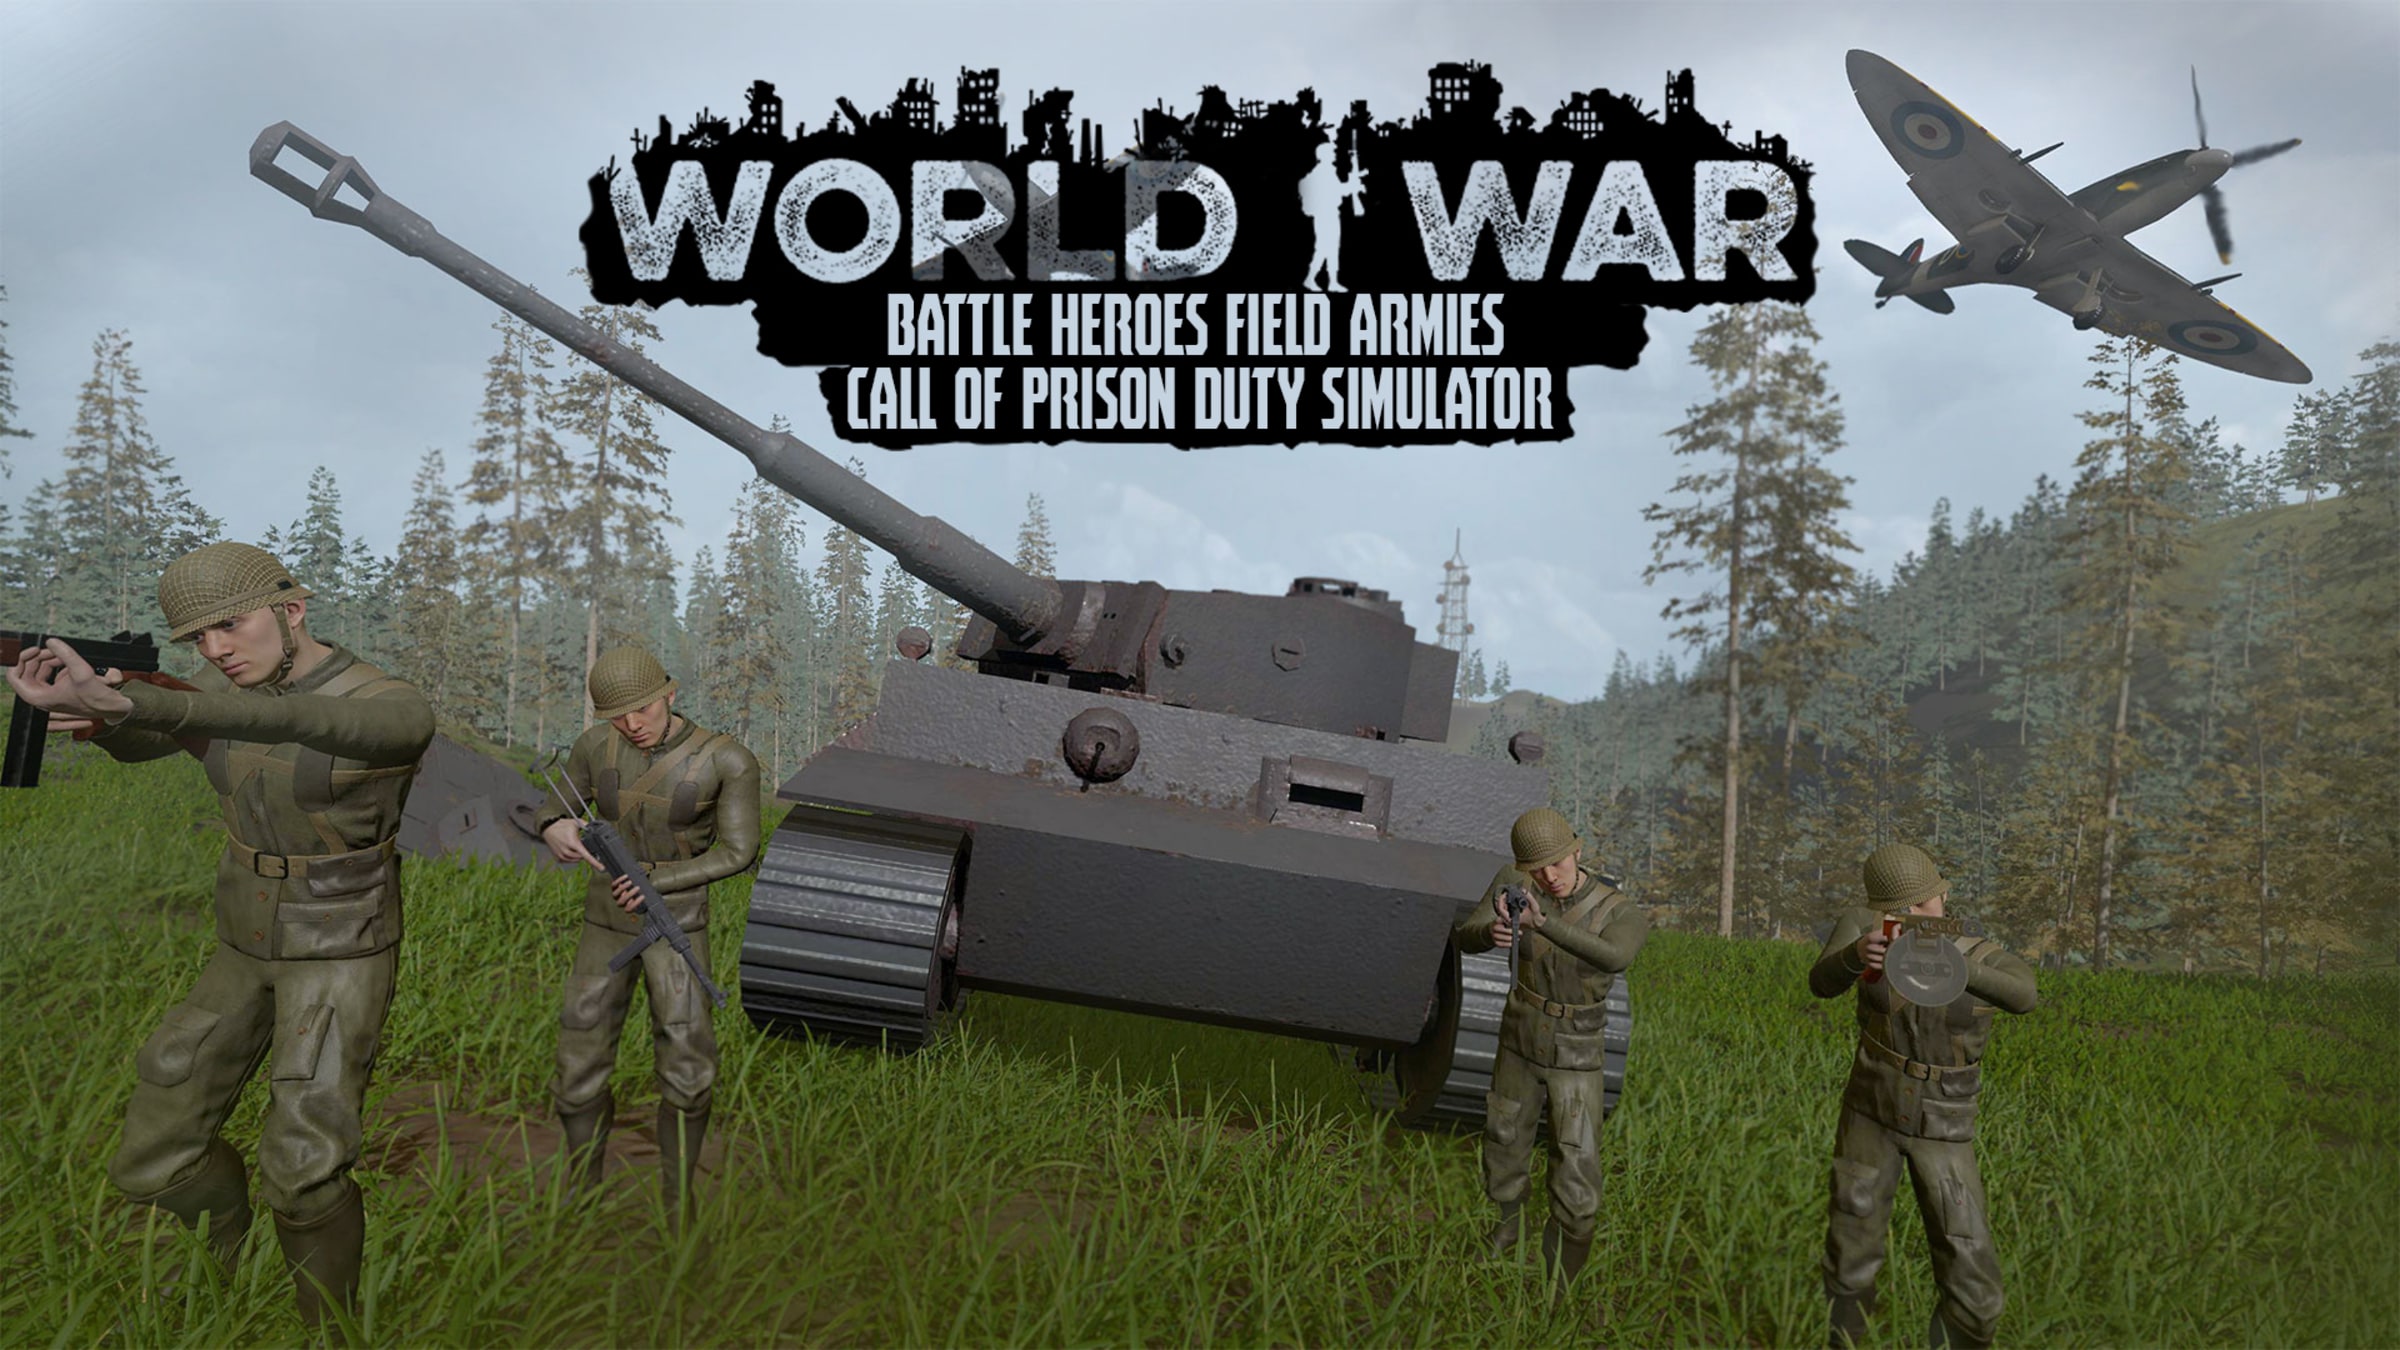 World War Battle Heroes Field Armies Call of Prison Duty Simulator for Nintendo Switch